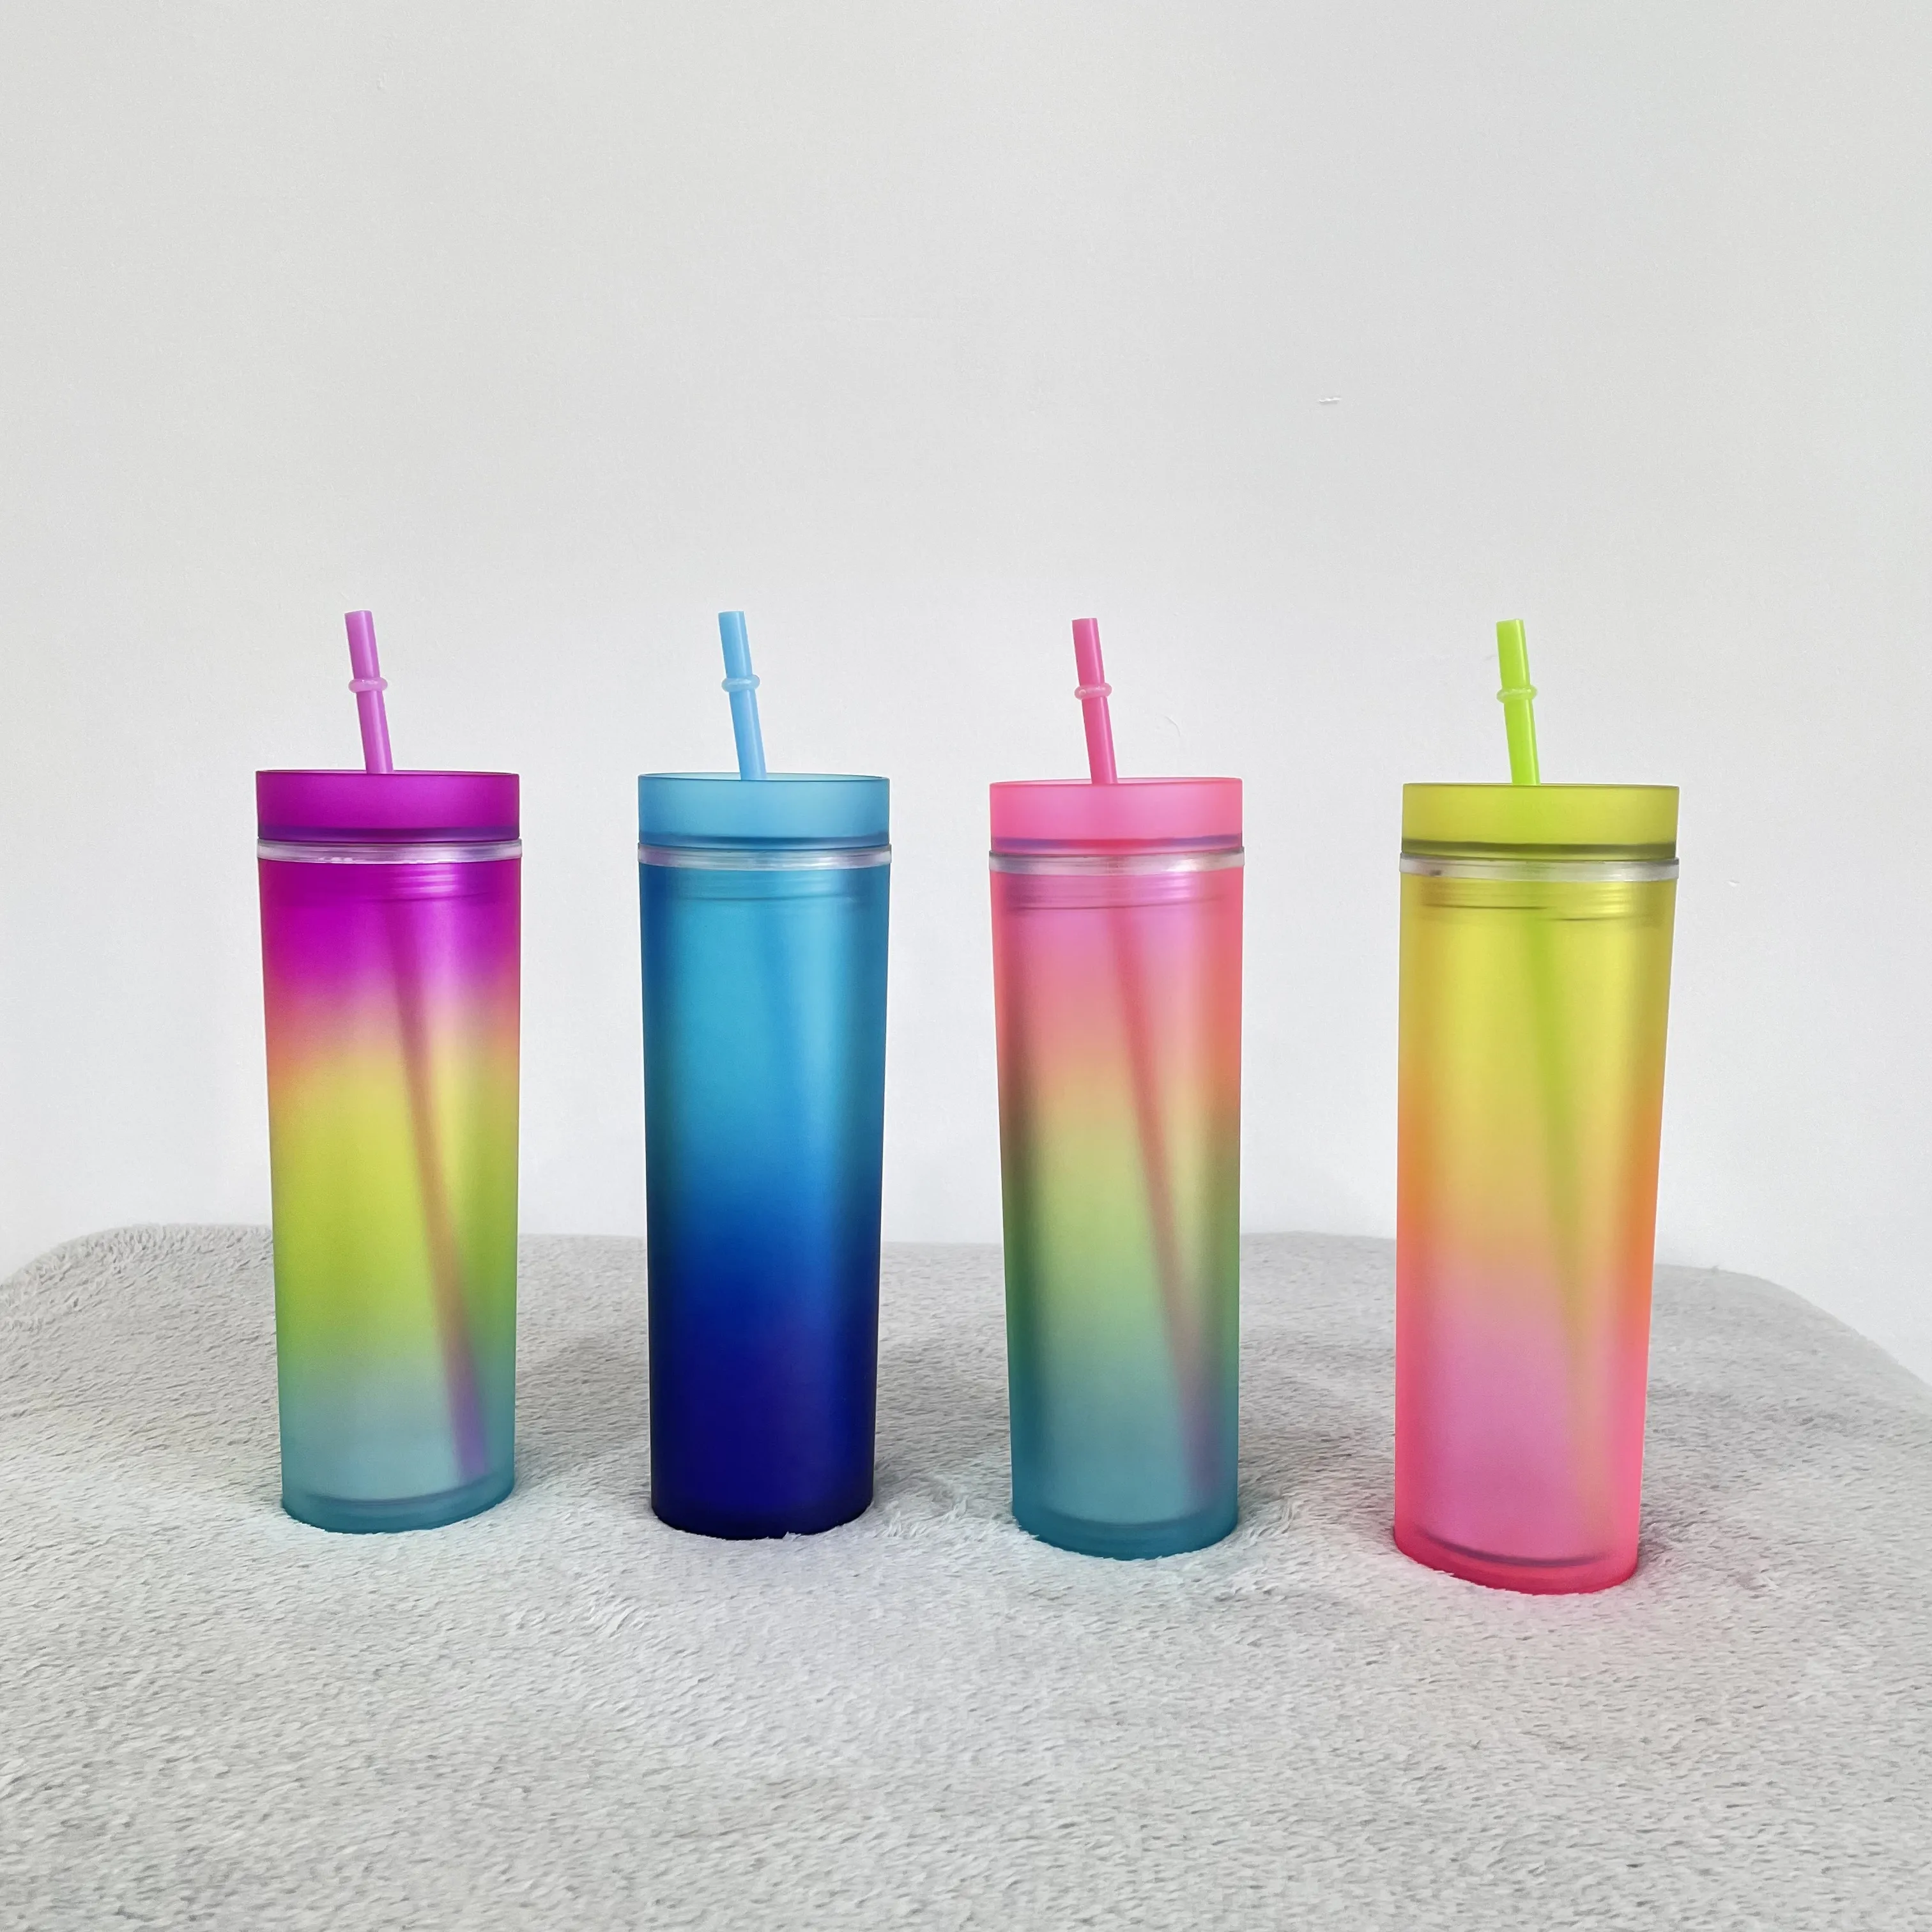 Tazze fredde colorate da 16 once bevanda ghiacciata acqua caffè tazze di plastica riutilizzabili di colore sfumato tazze riutilizzabili in plastica a prova di fuoriuscita